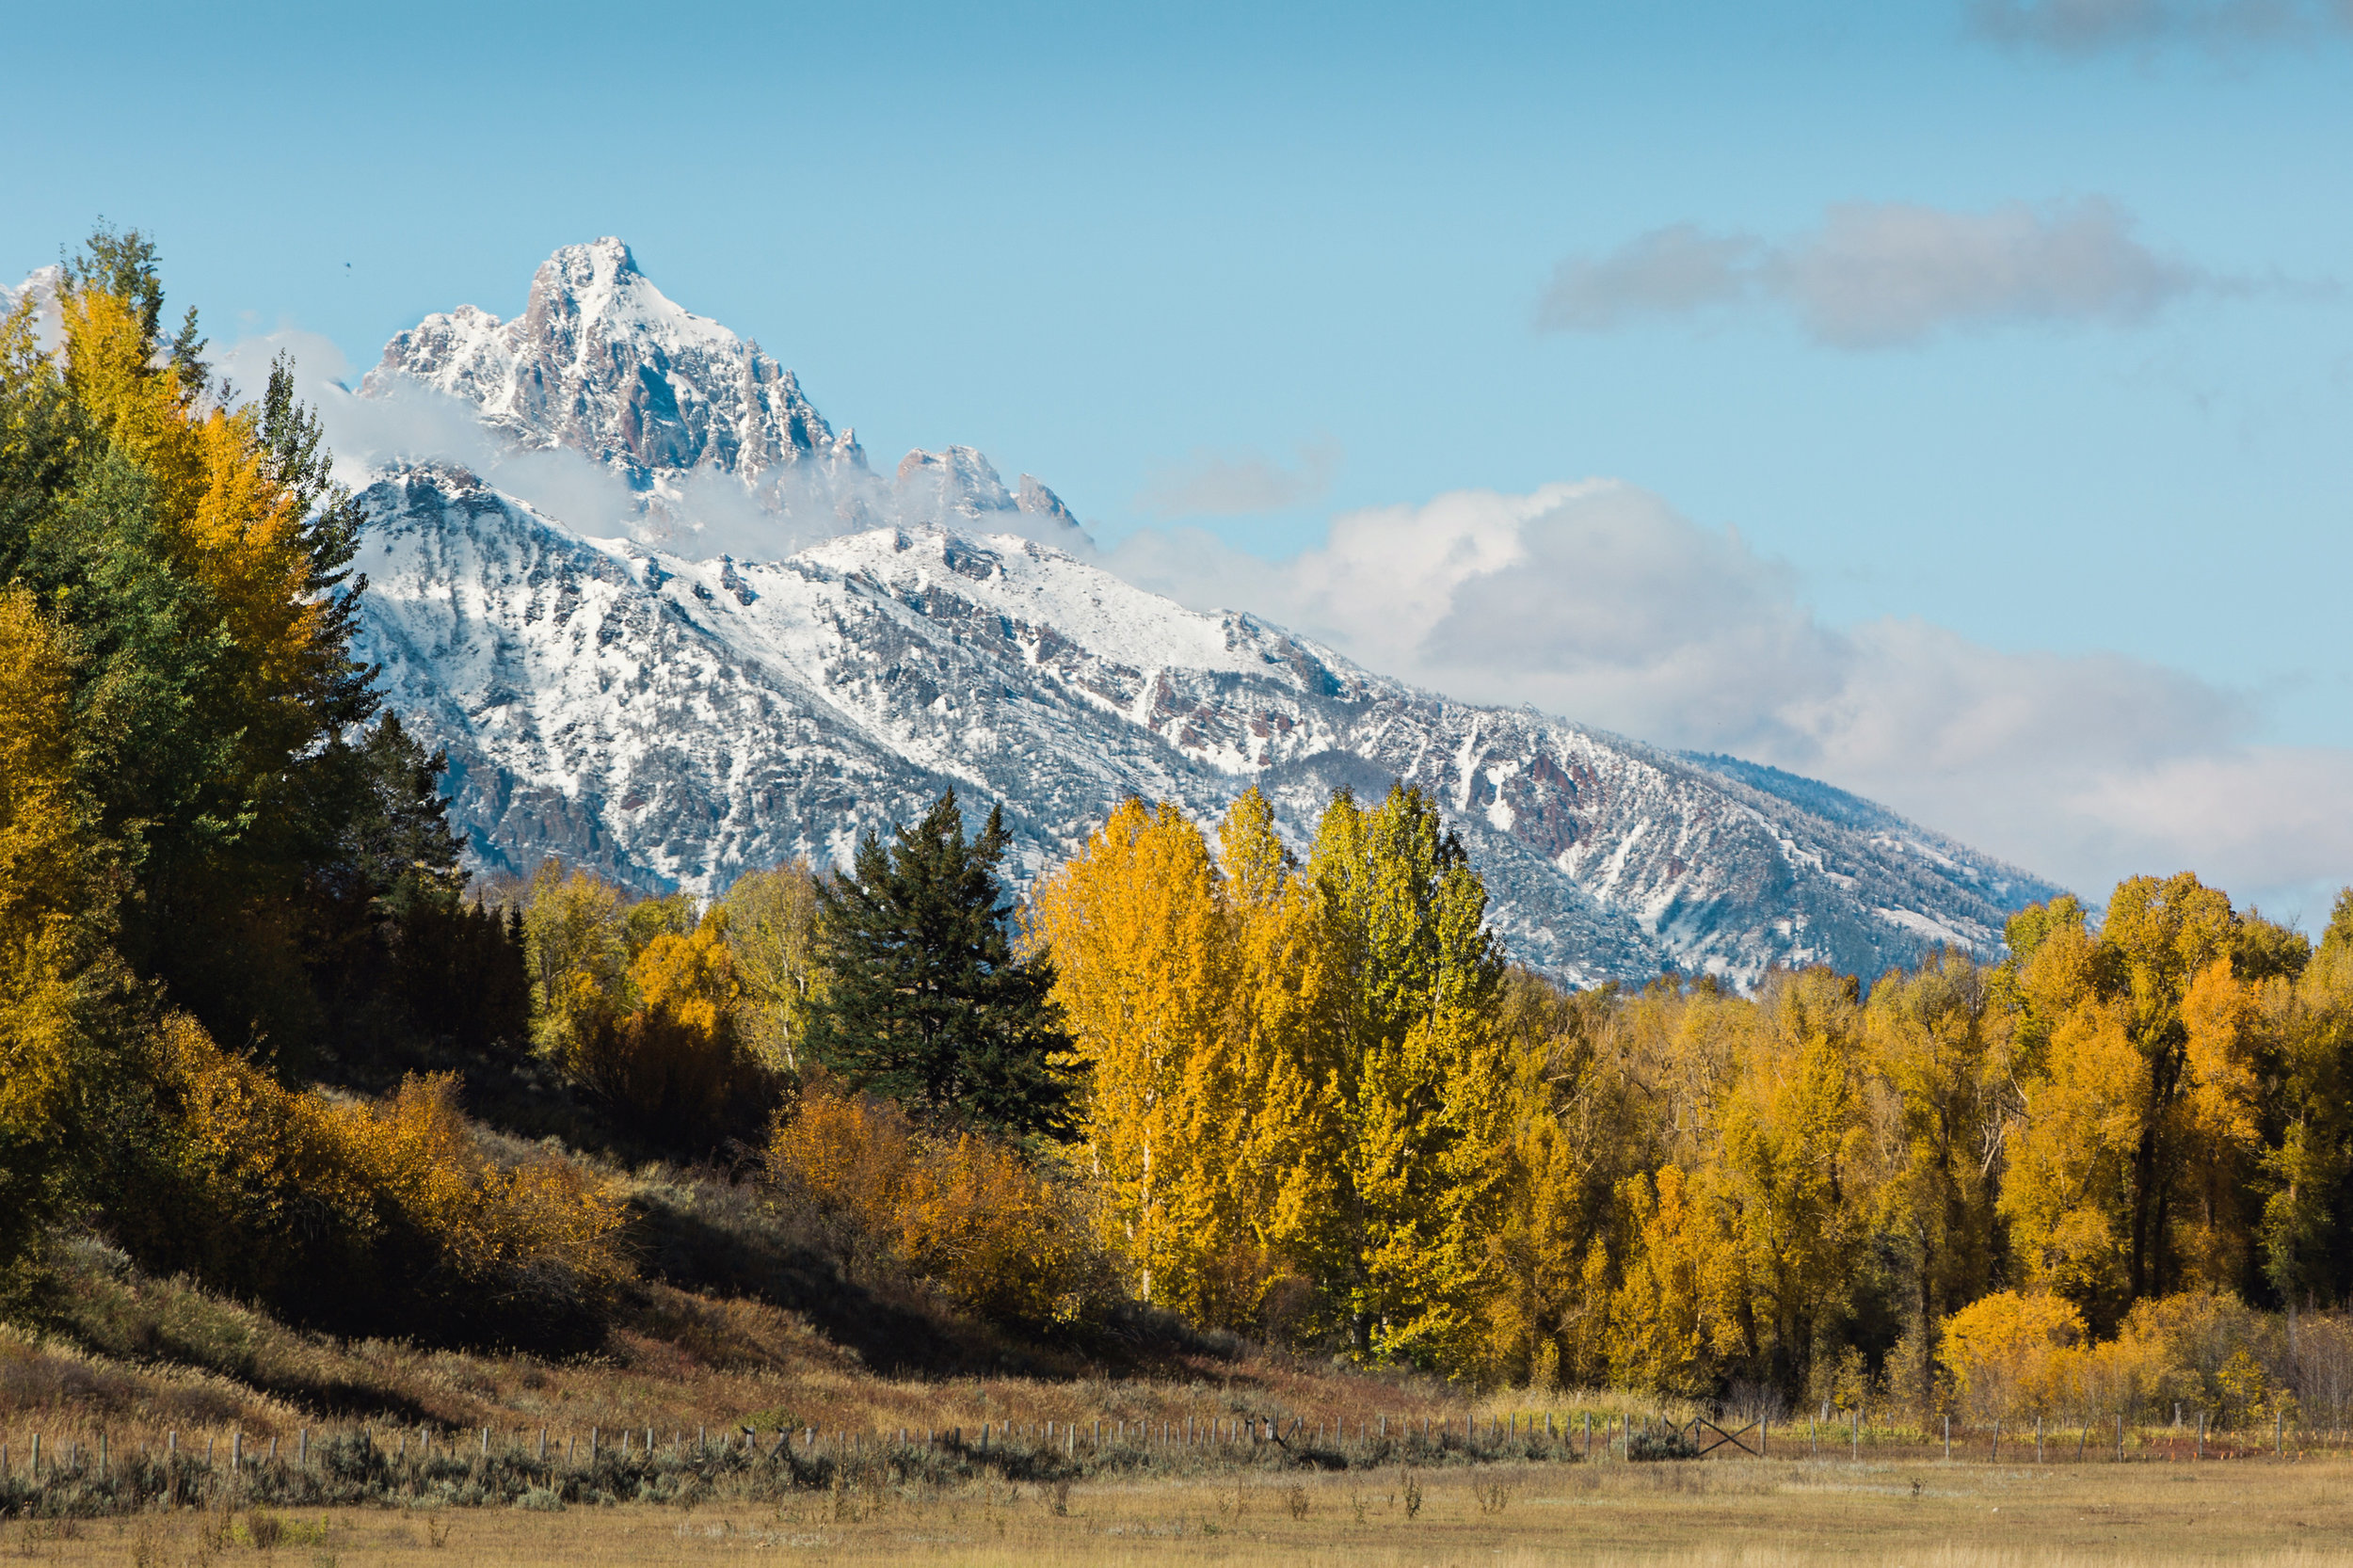 Cindy_Giovagnoli_Idaho_Wyoming_Grand_Teton_National_Park_autumn_aspens_camping_mountains-022.jpg